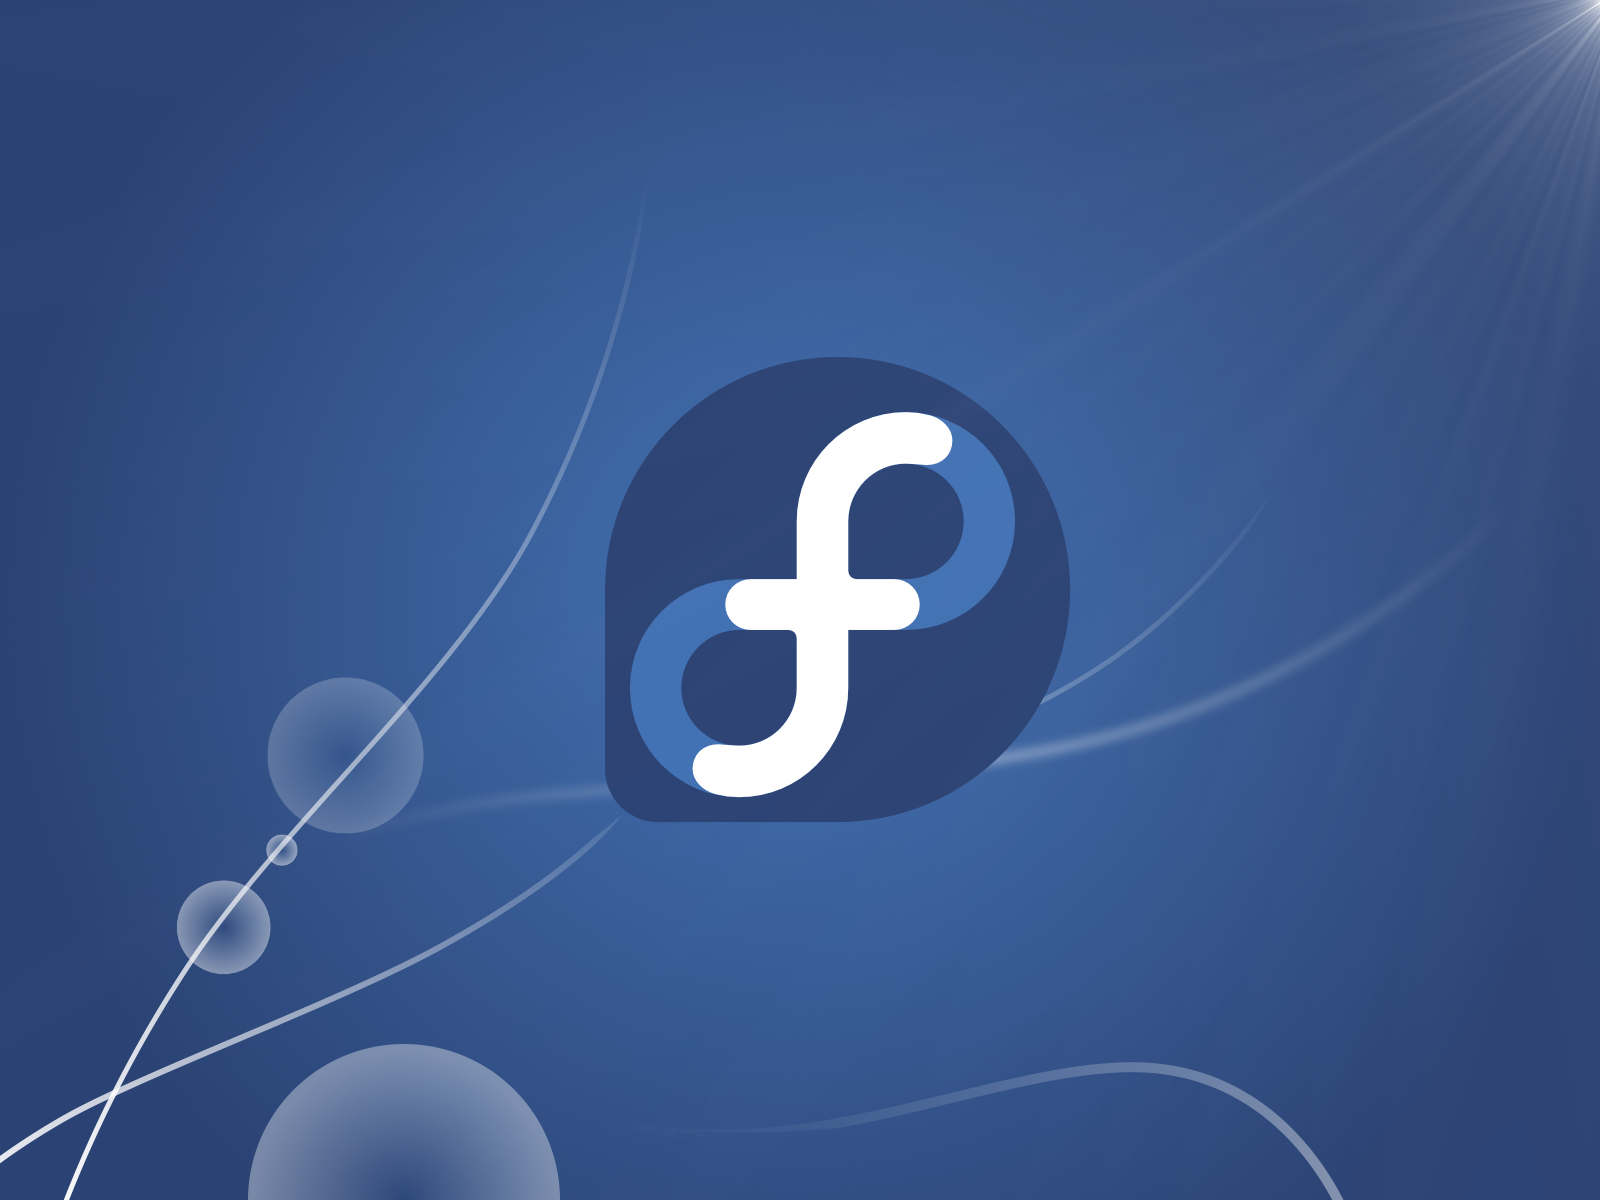 Logo Fedora